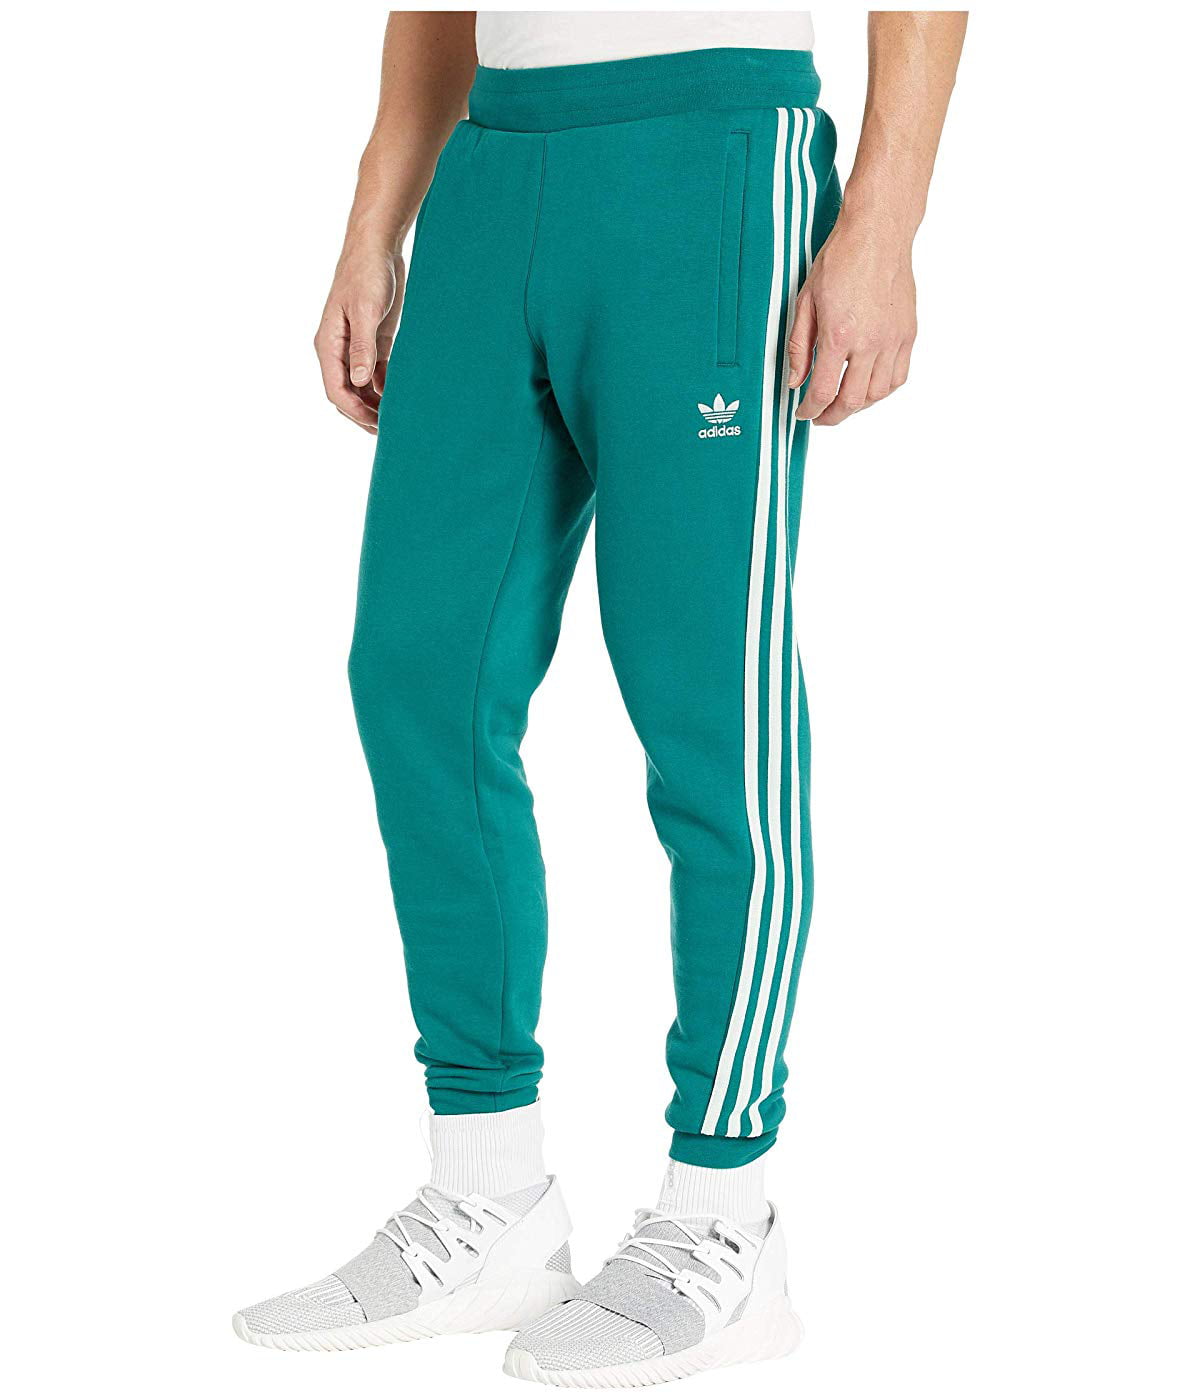 green striped adidas pants